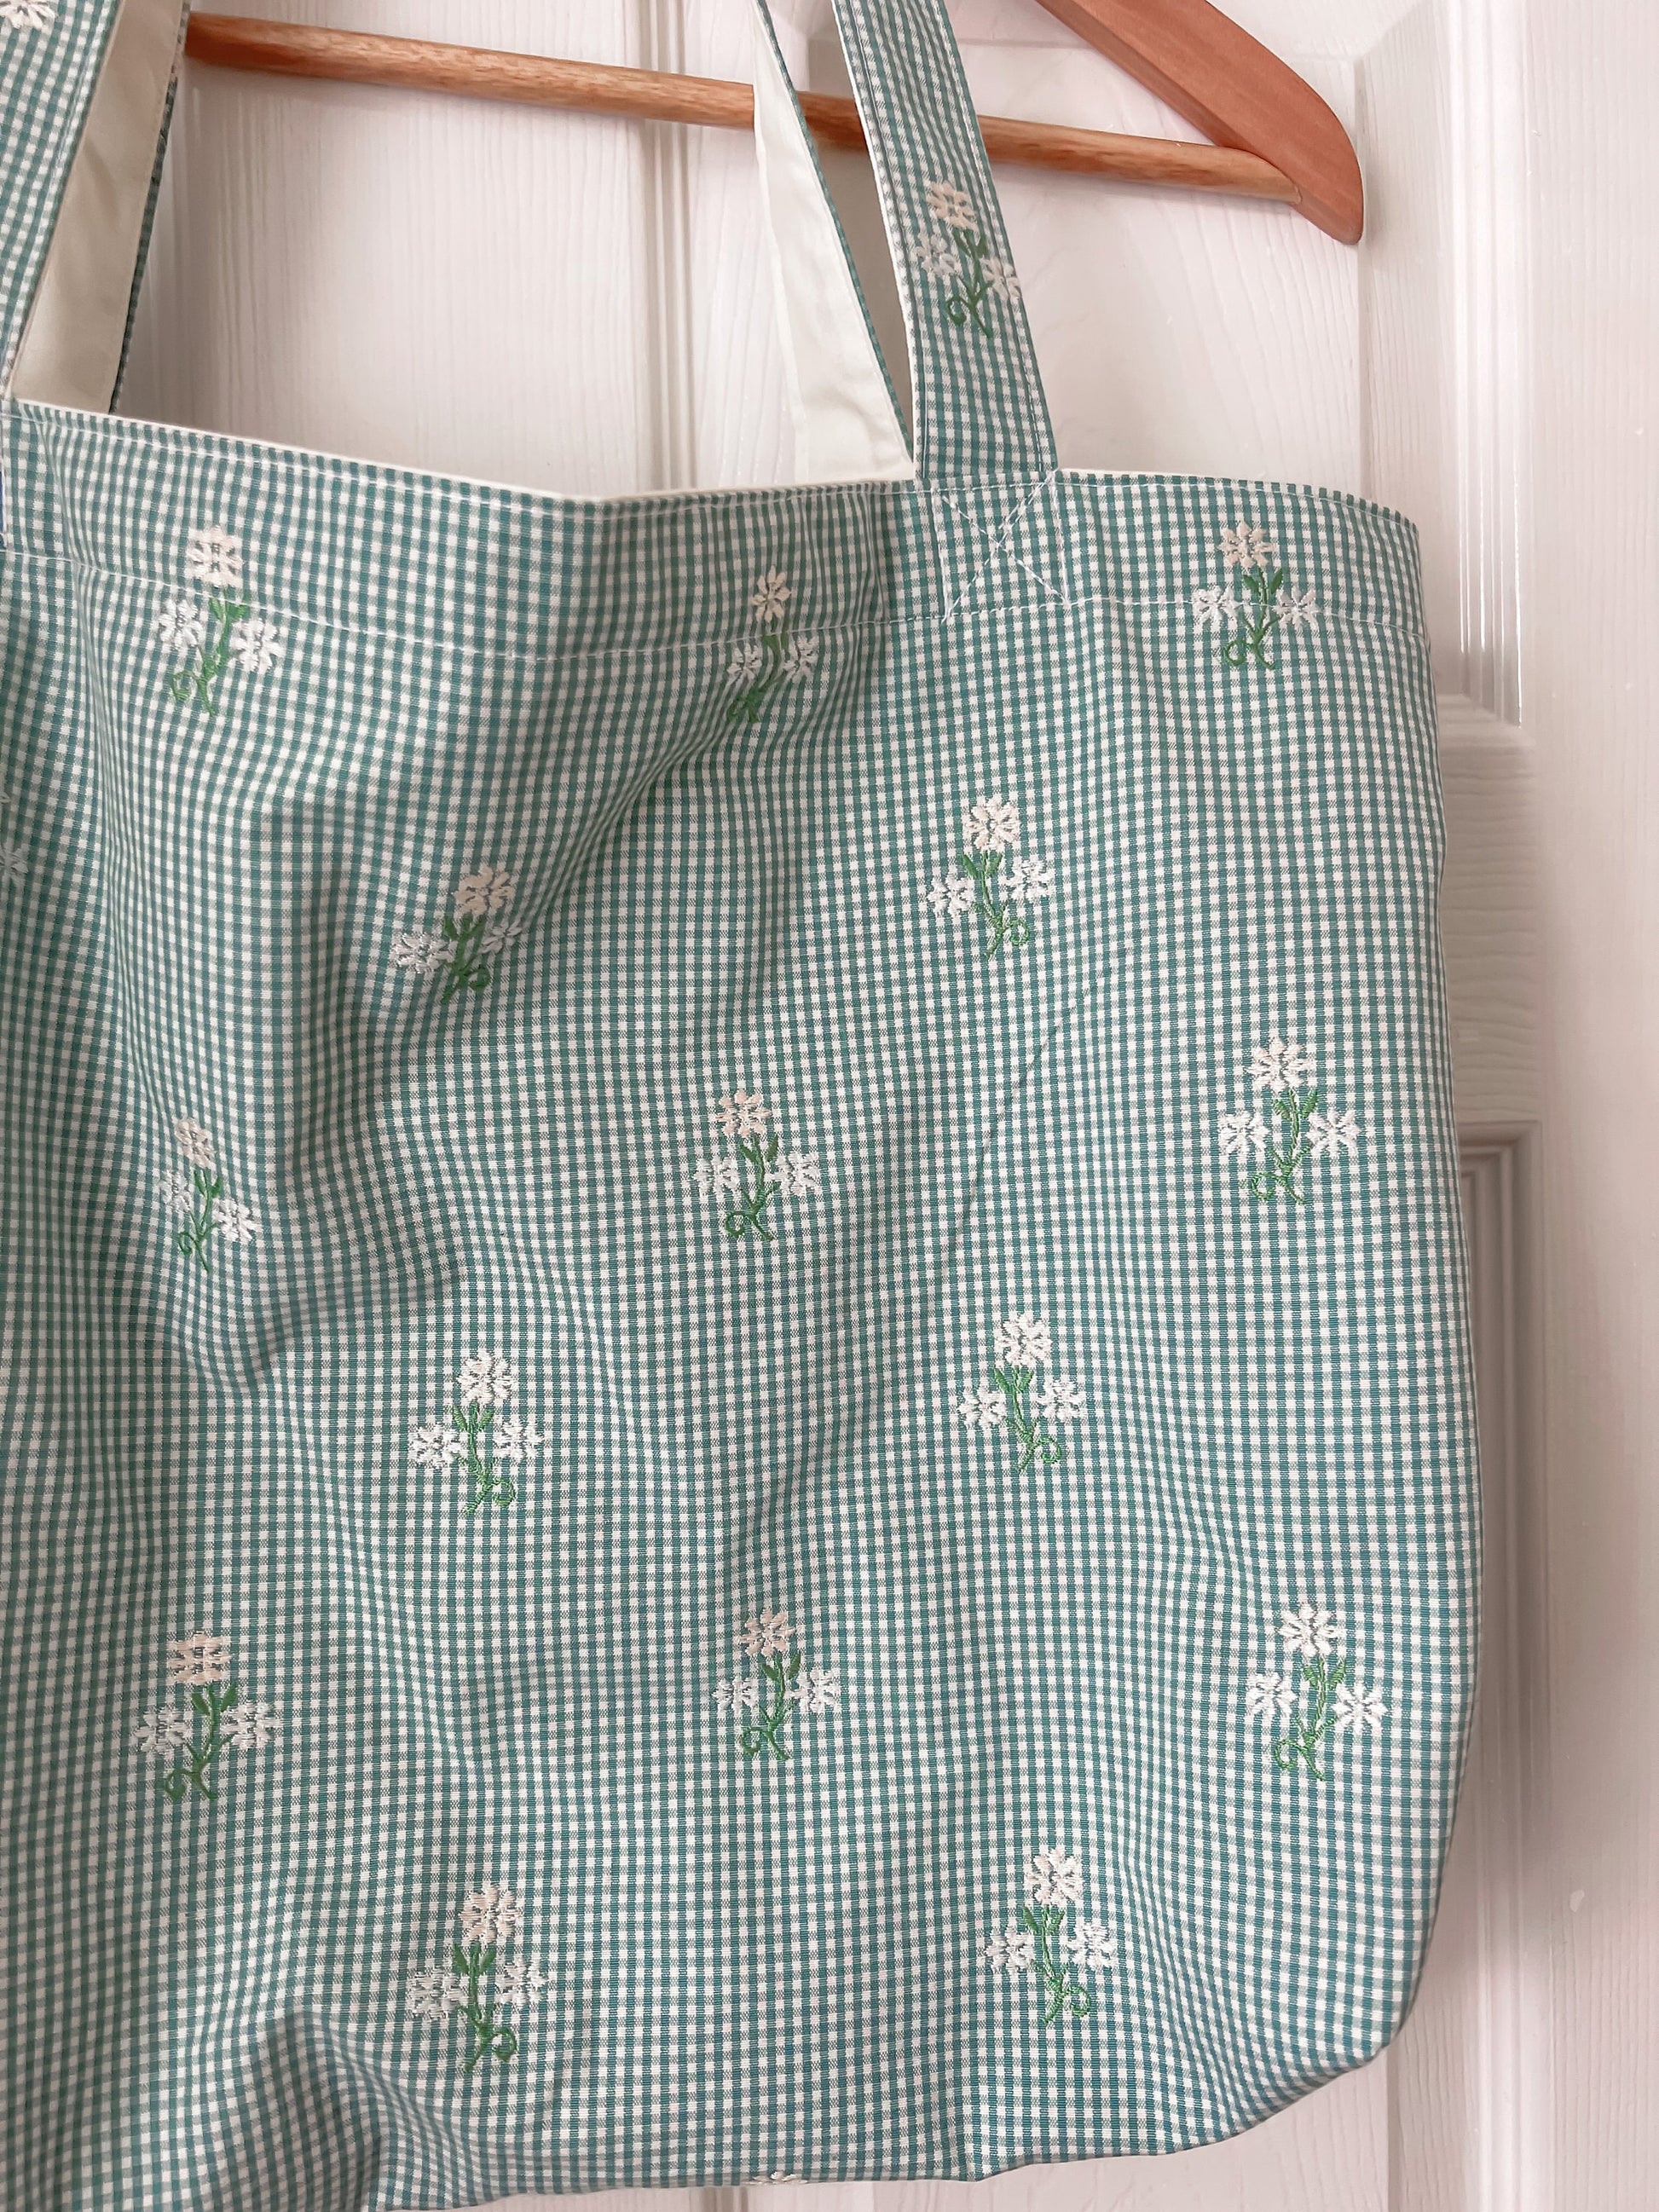 FLORAL TOTE BAG green embroidered floral tote bag, large reversible, mint floral gingham cotton tote bag, ditsy canvas bag handmade in U.K.